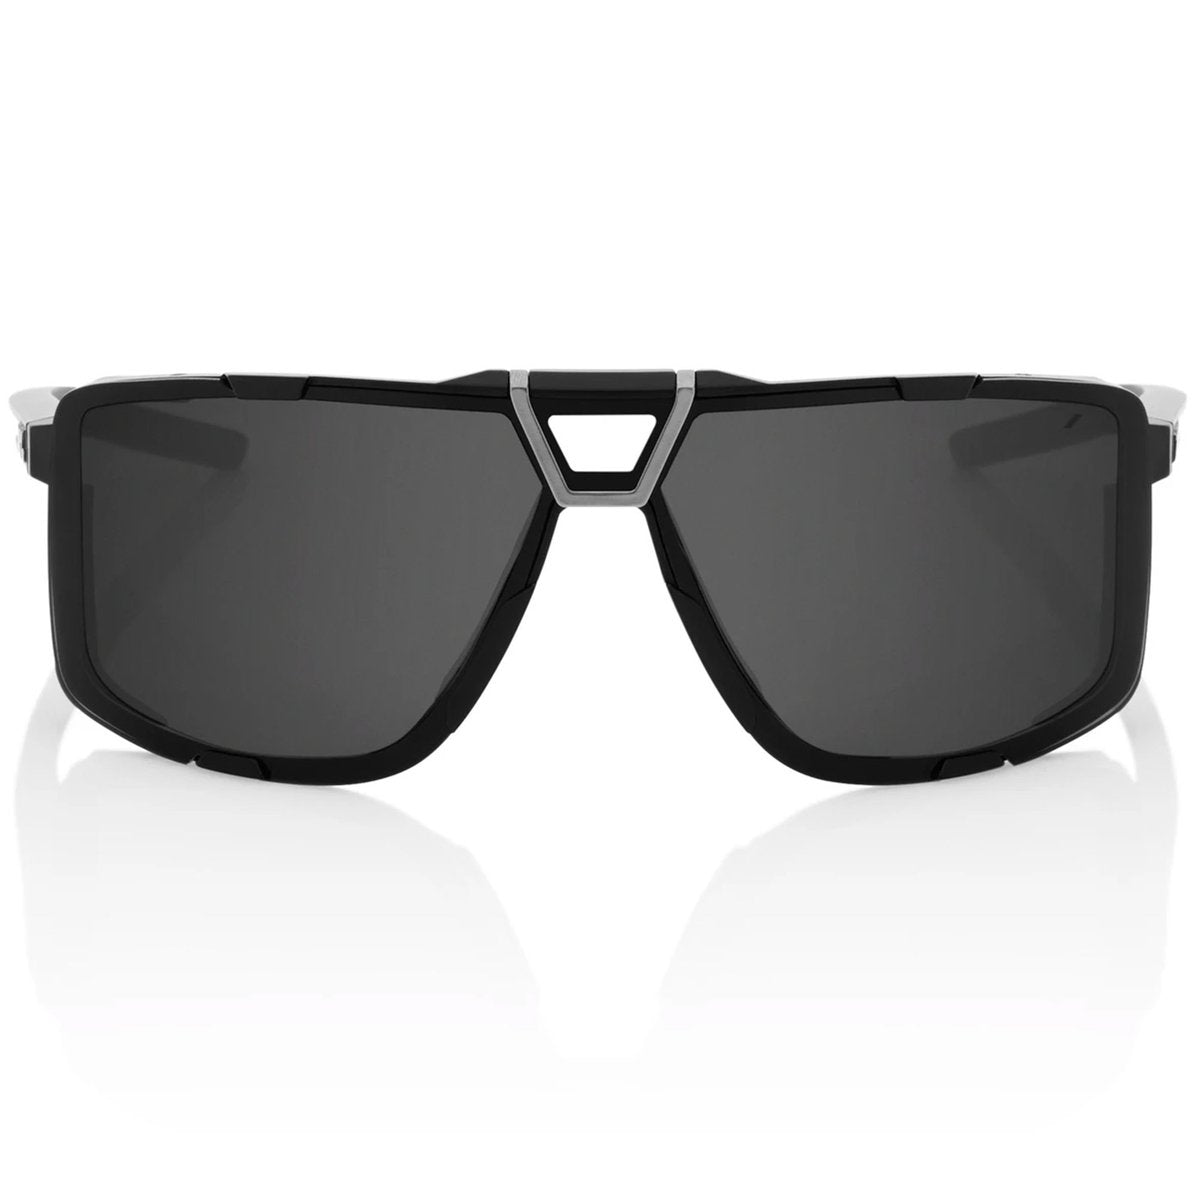 Ride 100% Sunglasses Authentic EASTCRAFT Matte Black Smoke Lens